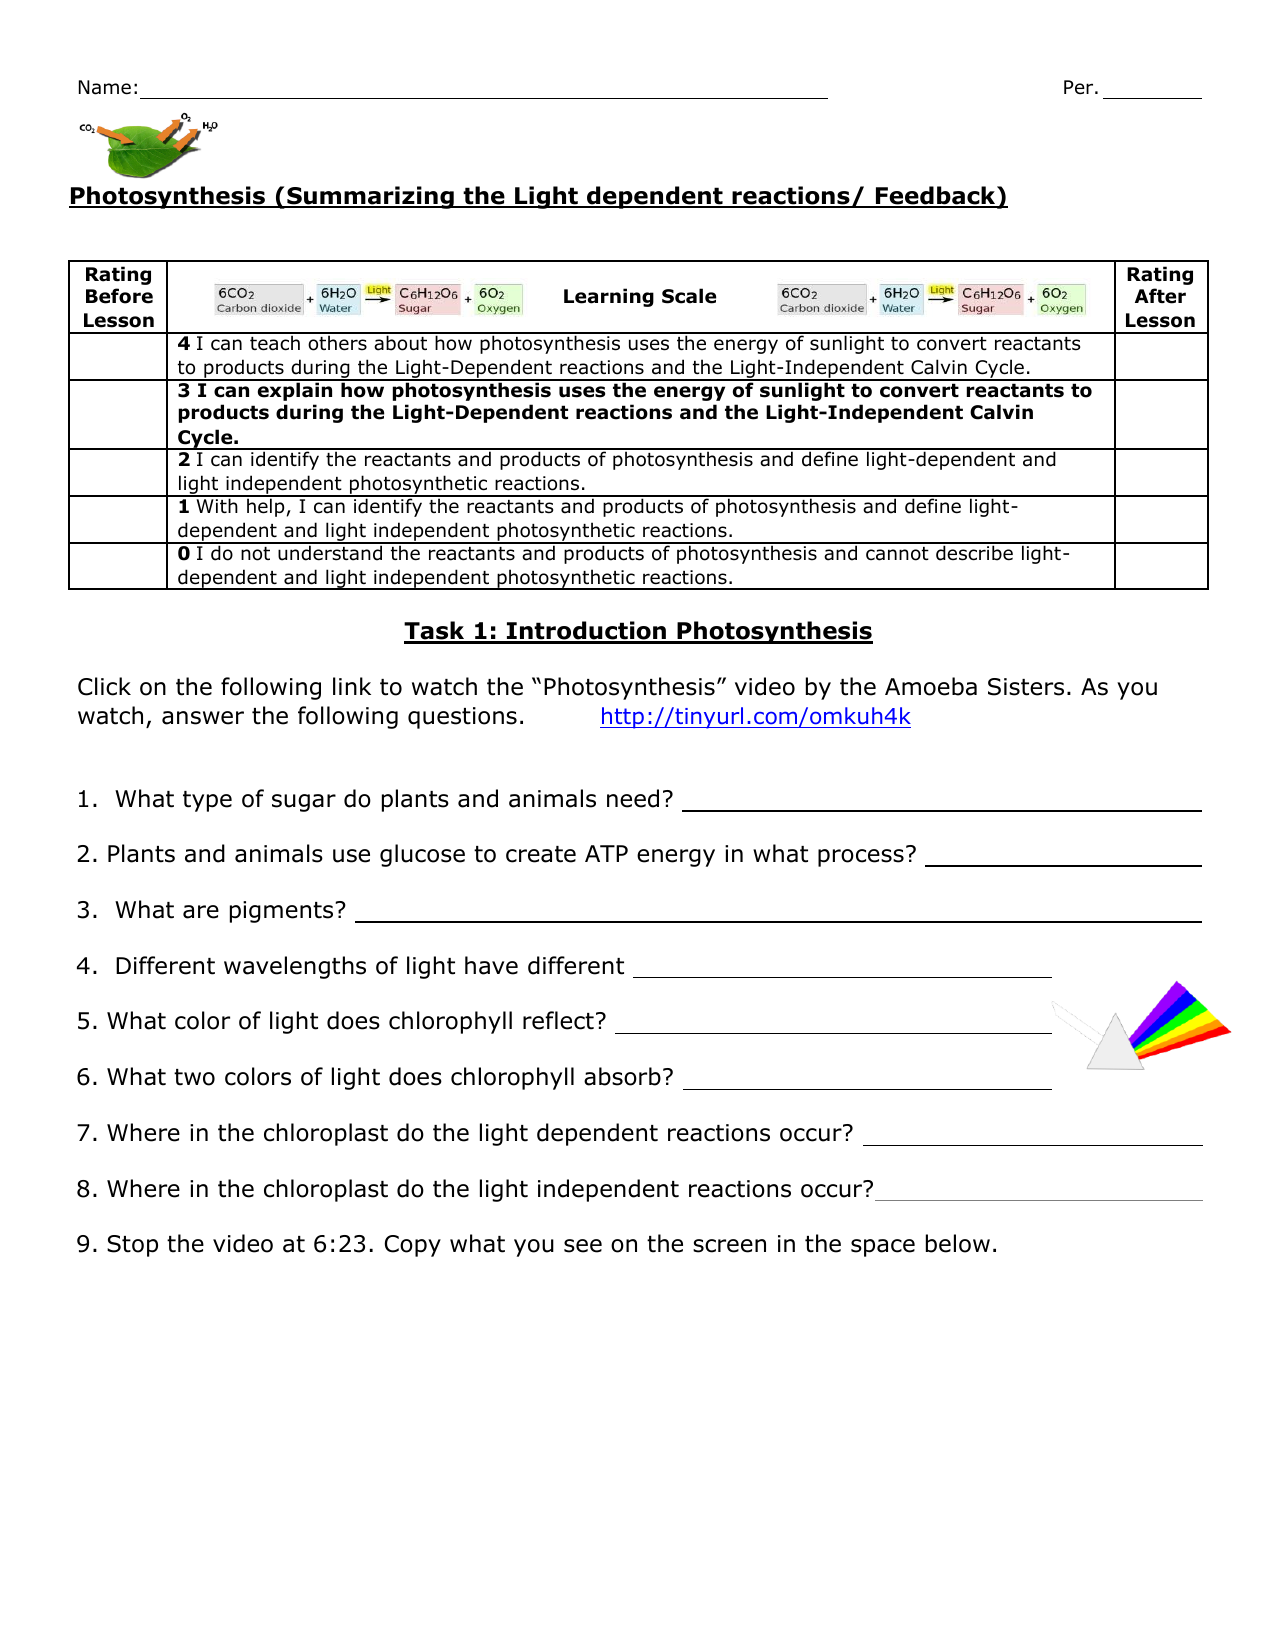 Photosynthesis - Week-9 Assignment worksheet